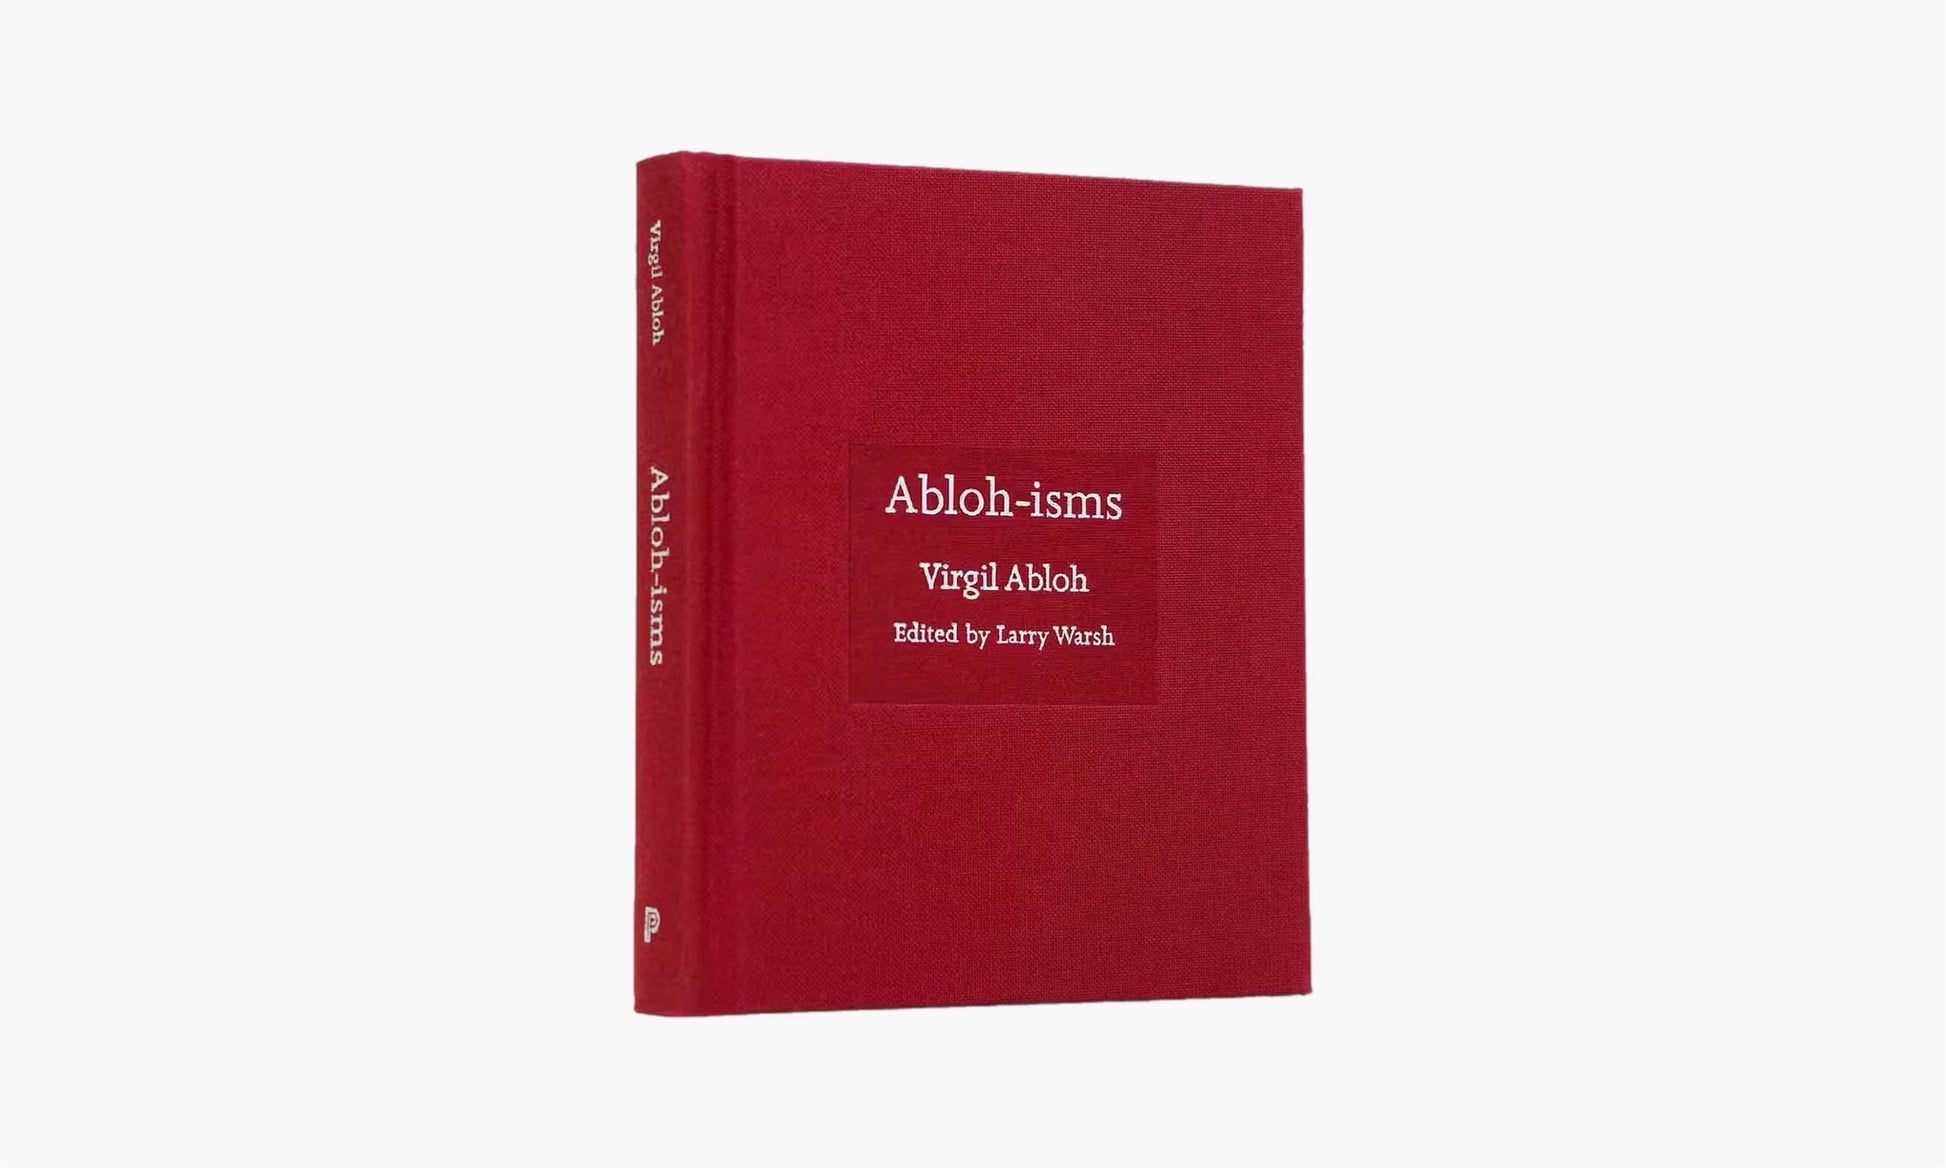 Virgil Abloh Abloh-isms Book | The Sortage